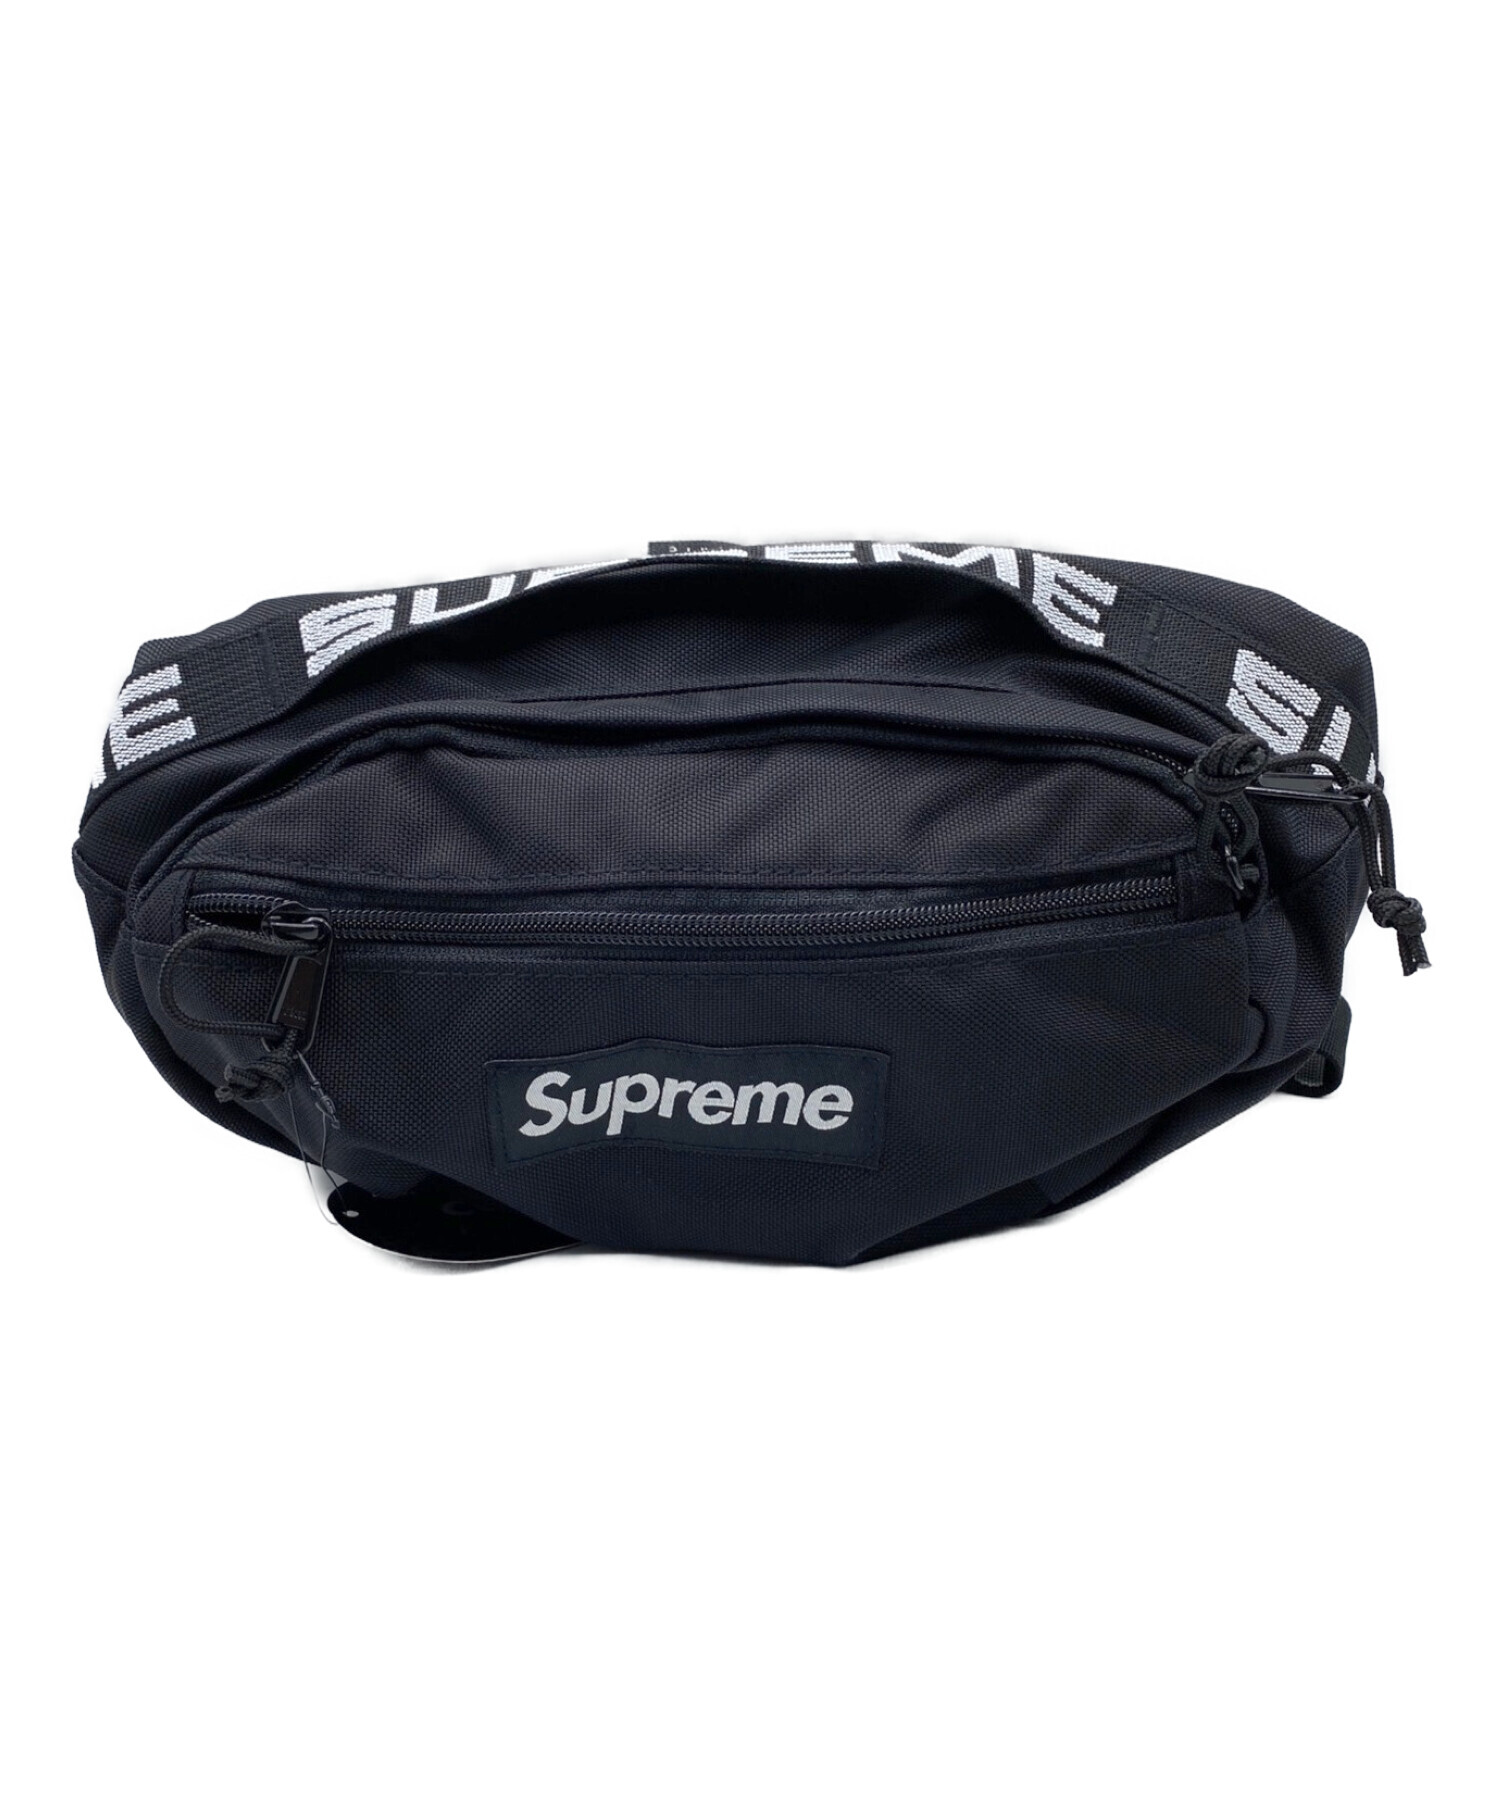 supreme 18ss waist bag black - ボディーバッグ